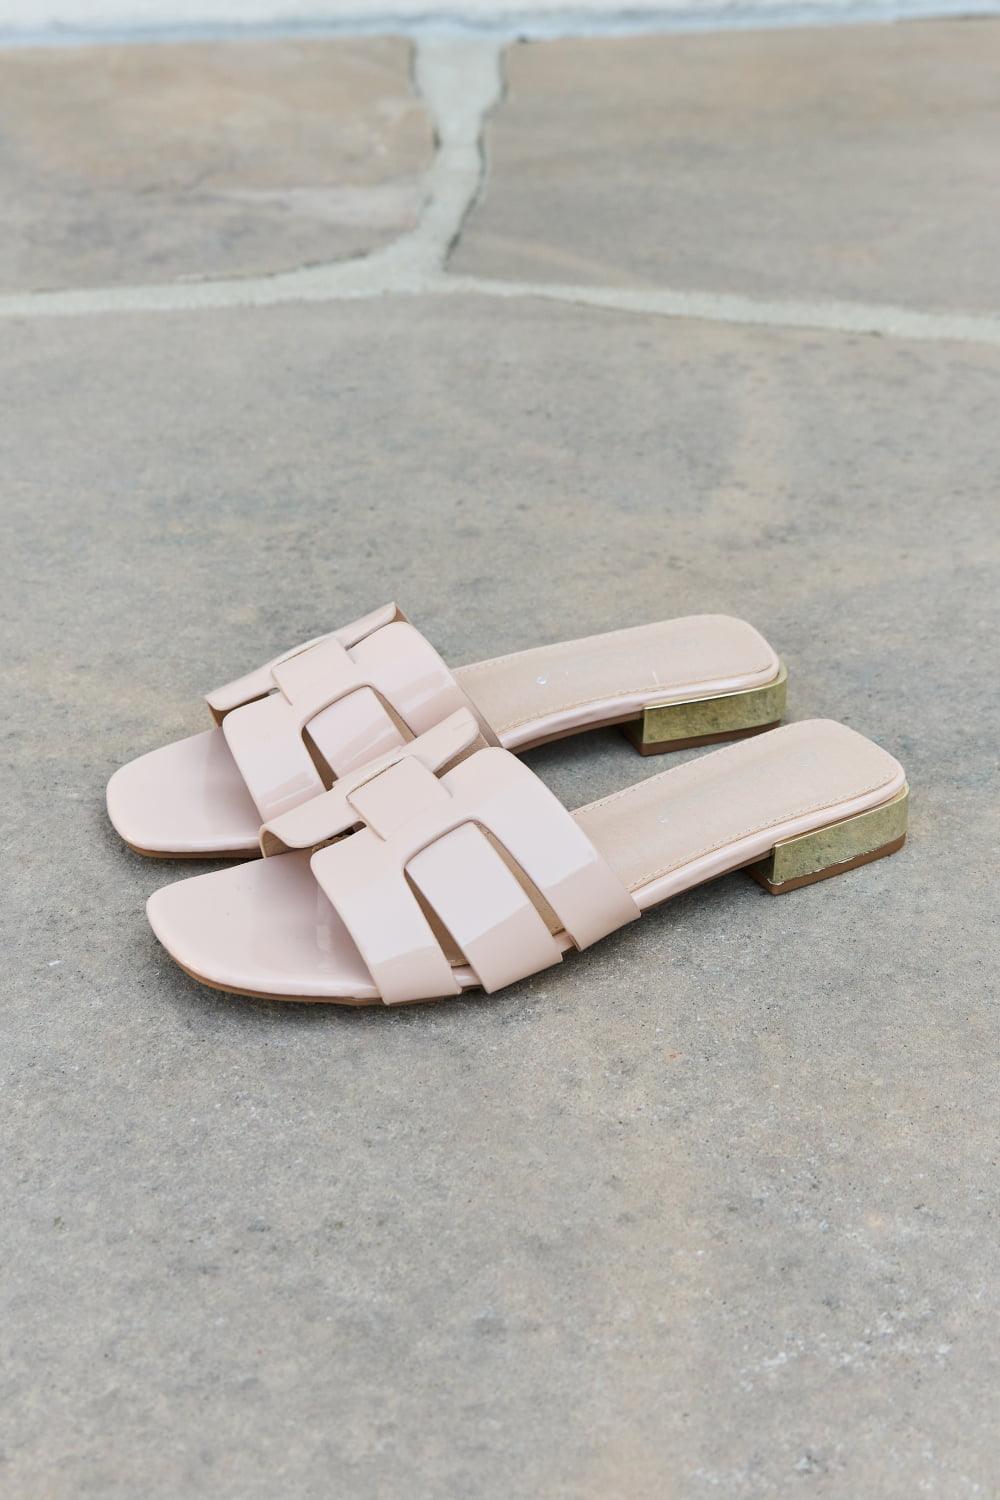 Walk It Out Slide Sandals in Nude - SAVLUXE